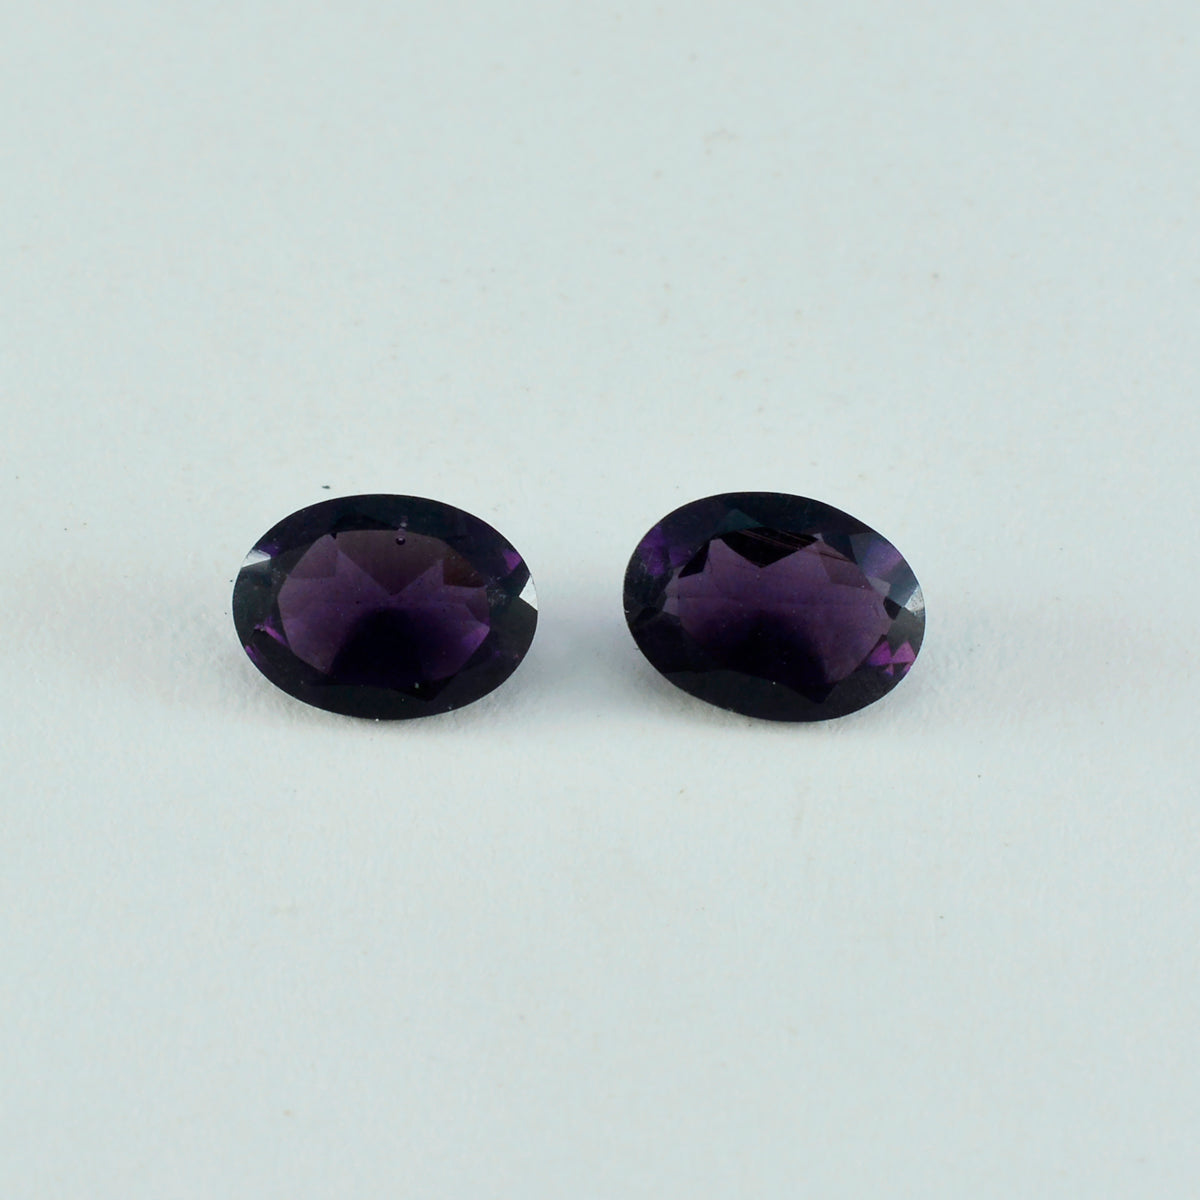 Riyogems, 1 pieza, amatista púrpura CZ facetada, 10x12mm, forma ovalada, gemas sueltas de excelente calidad